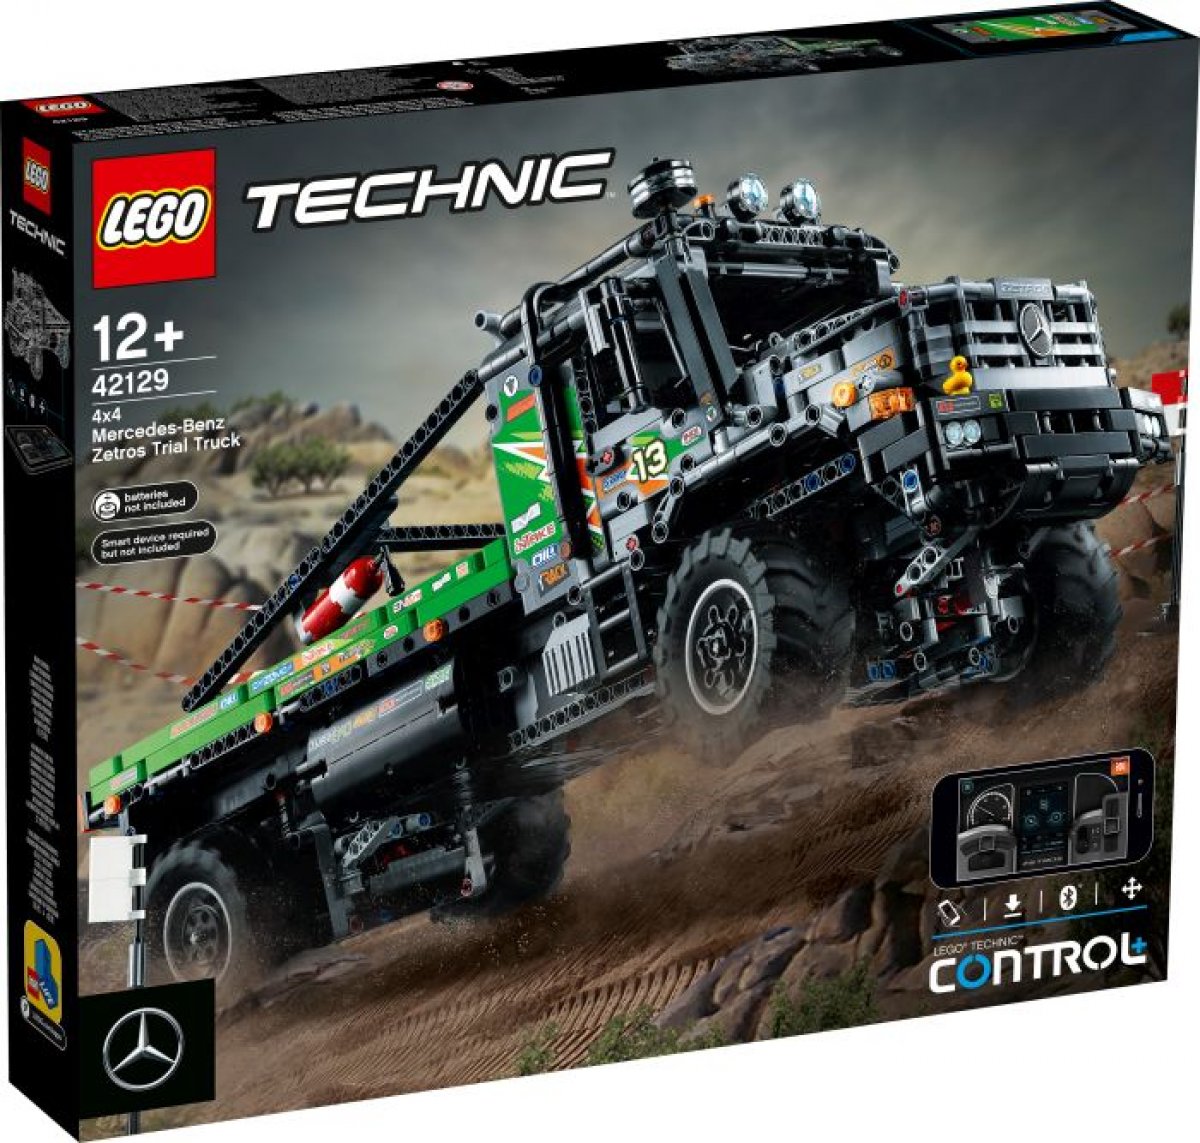 LEGO 42129 - Technic Mercedes 4x4 Zetros Offroad-Truck